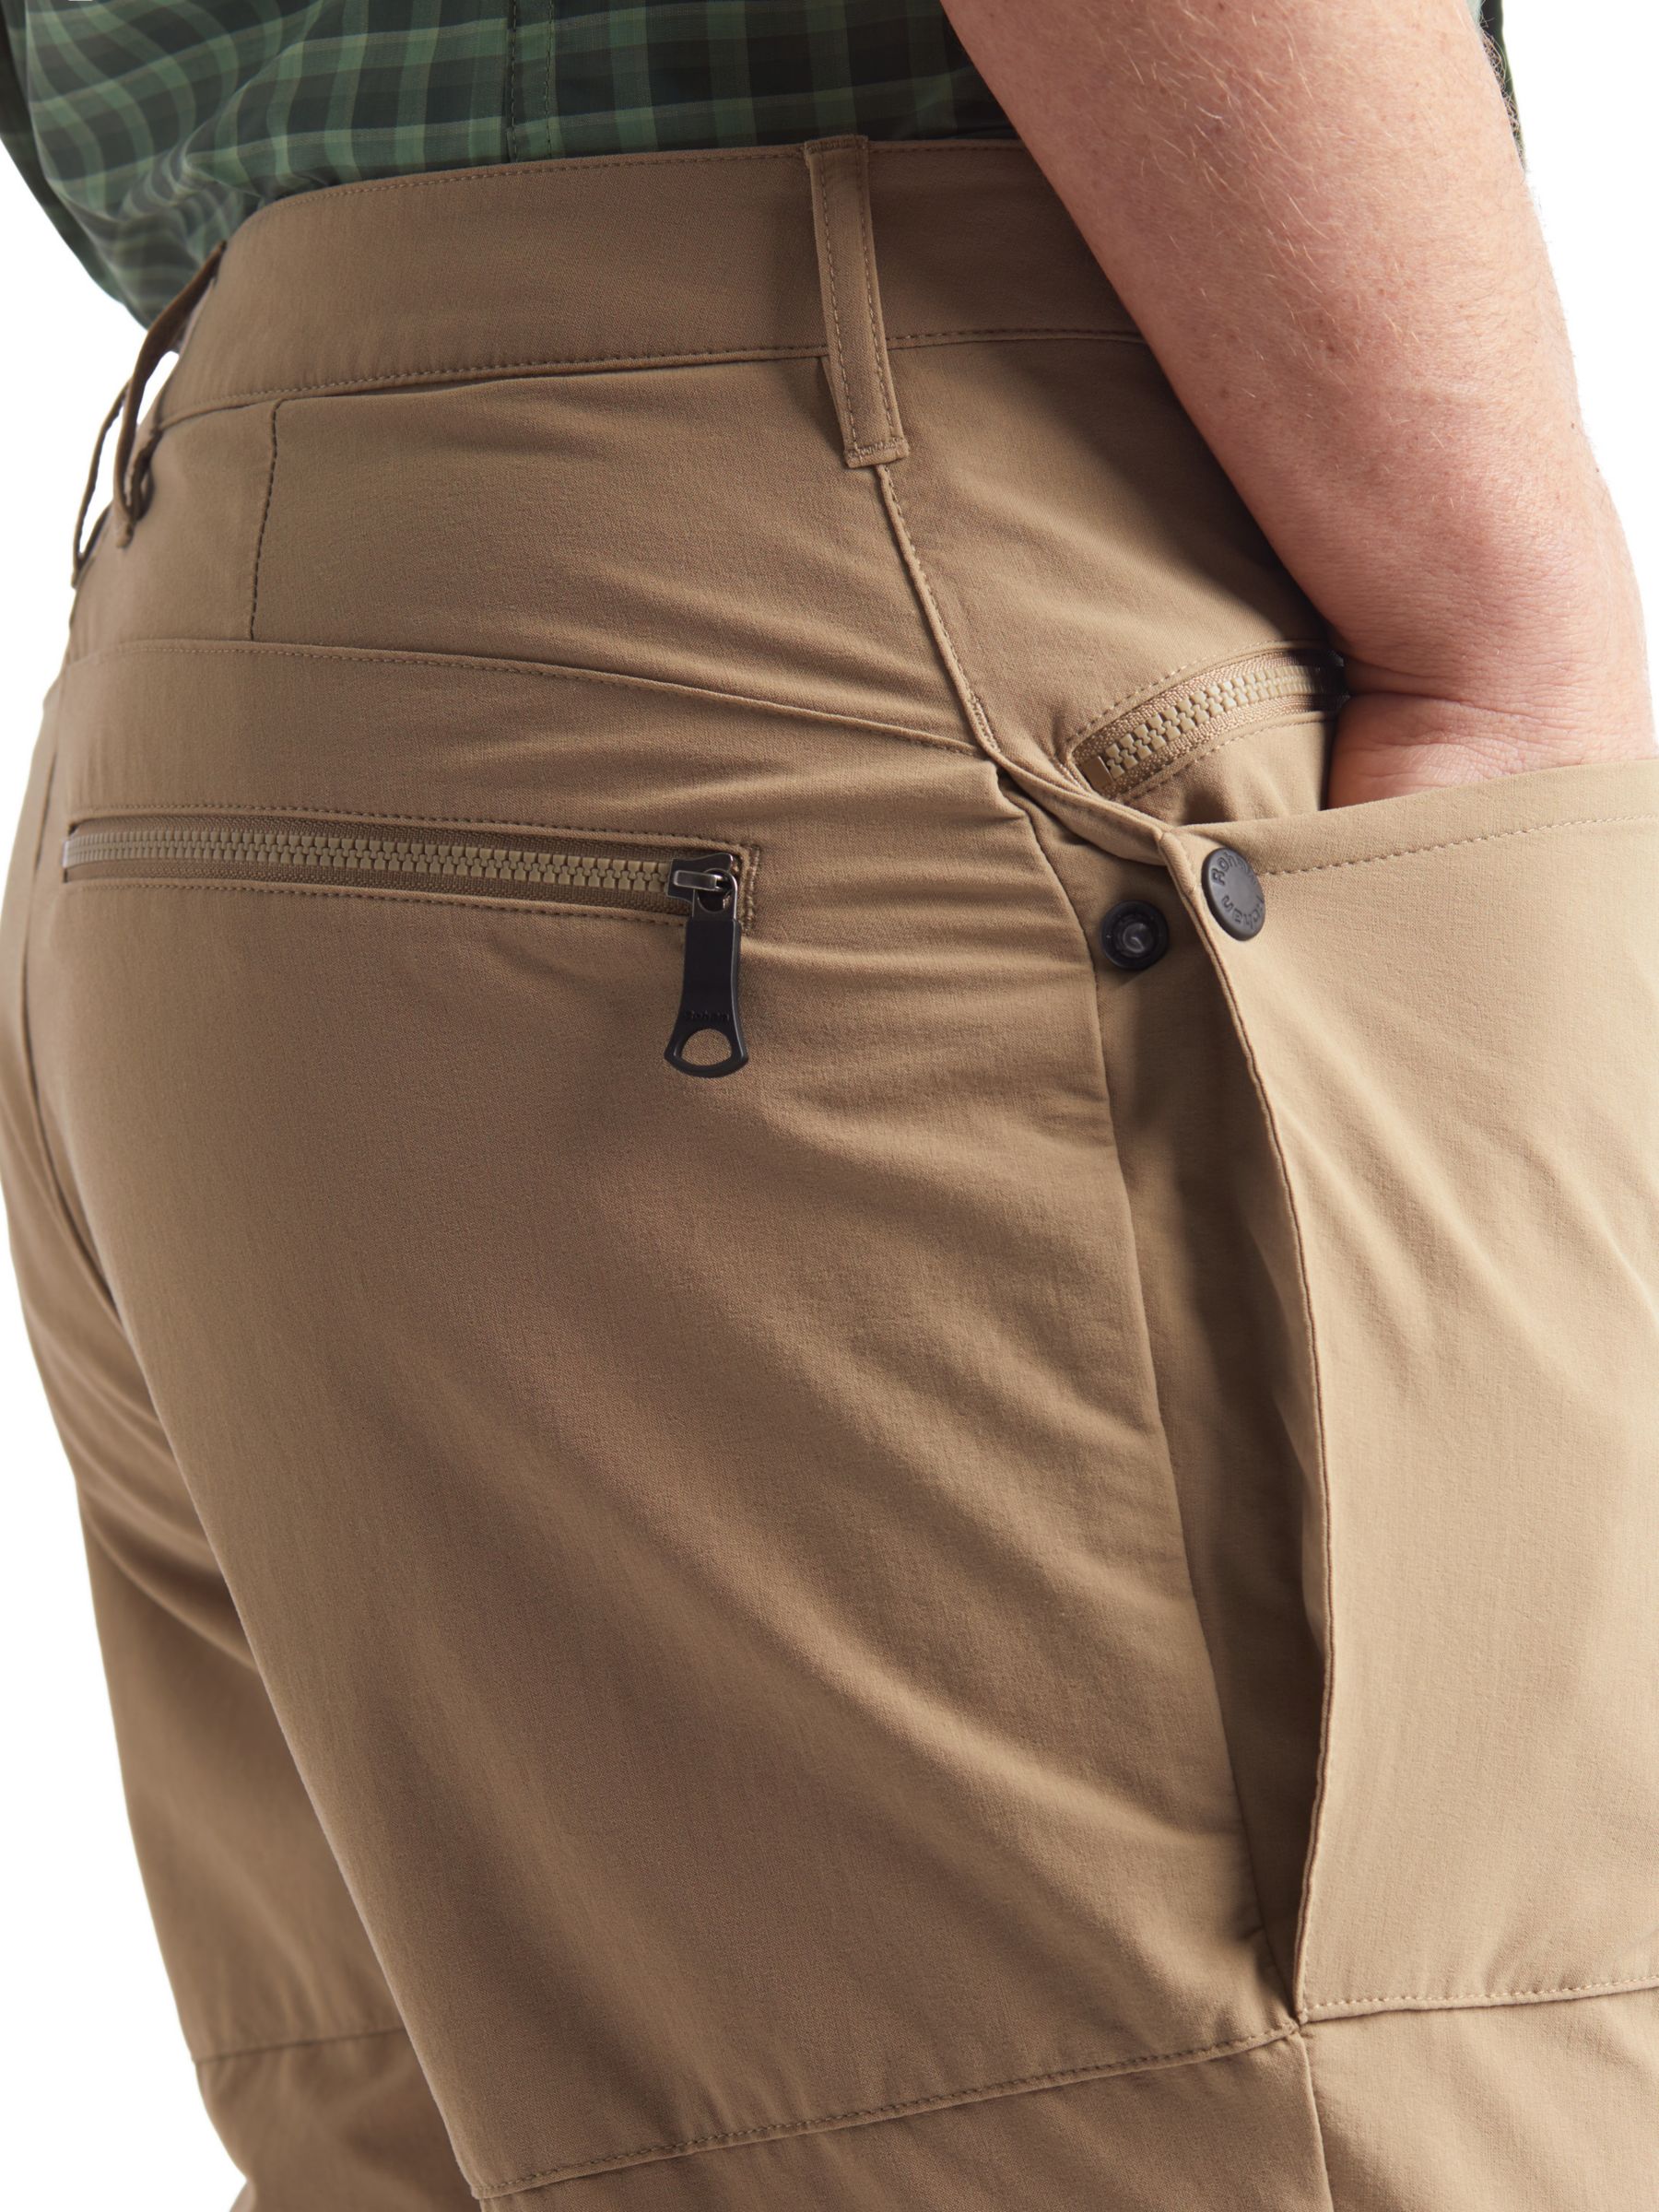 Buy Rohan Men's Stretch Bags Zip Off Walking Trousers Online at johnlewis.com